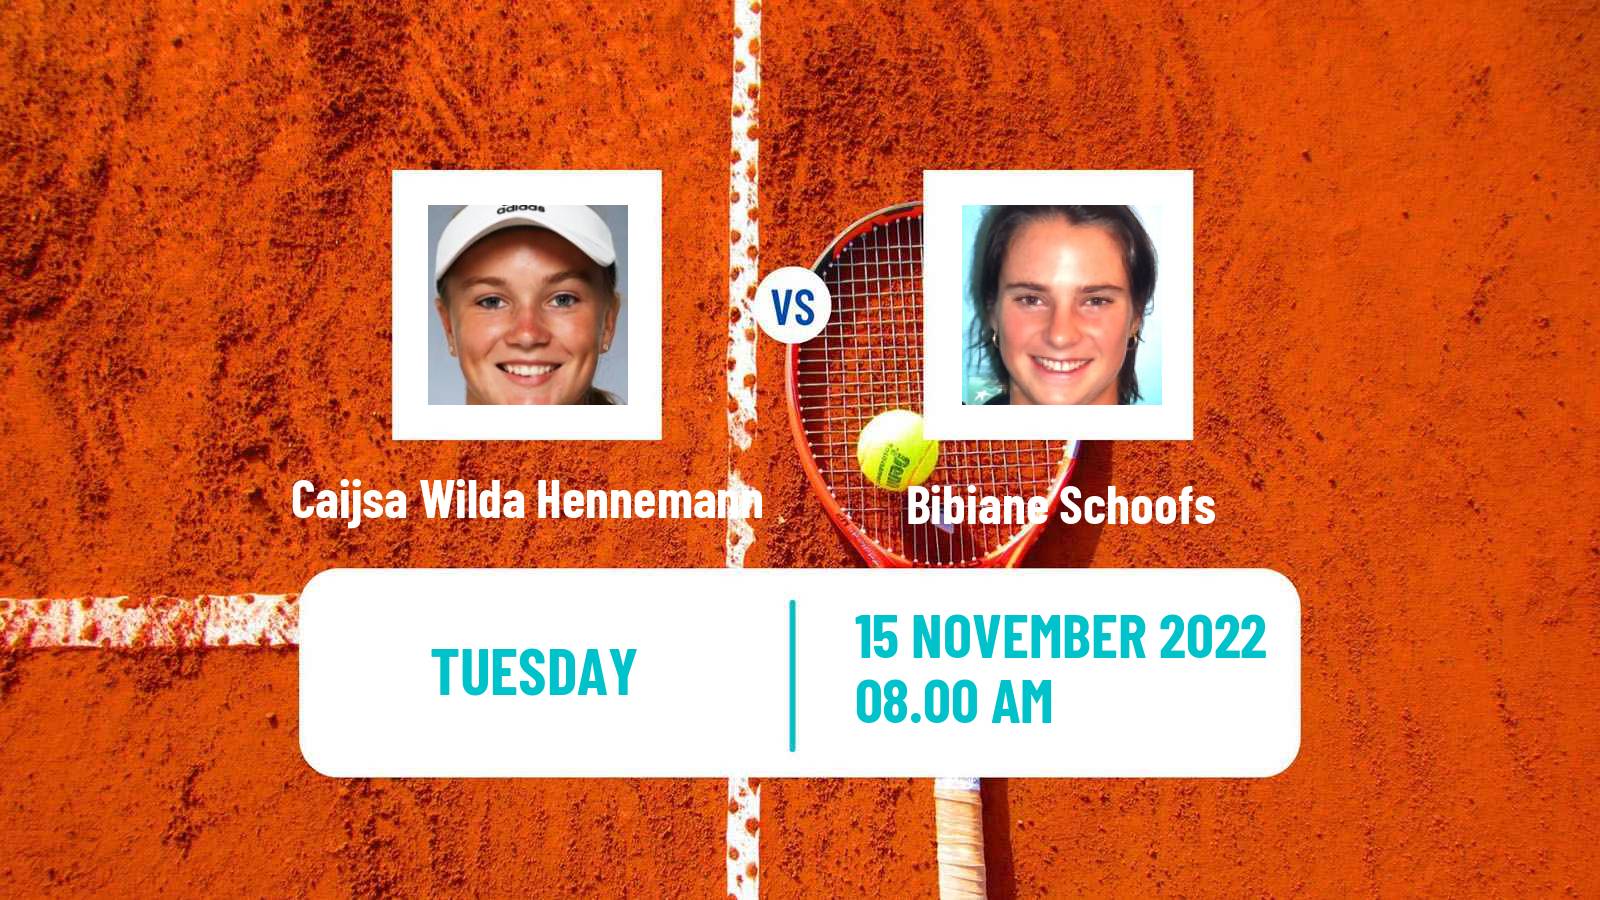 Tennis ITF Tournaments Caijsa Wilda Hennemann - Bibiane Schoofs